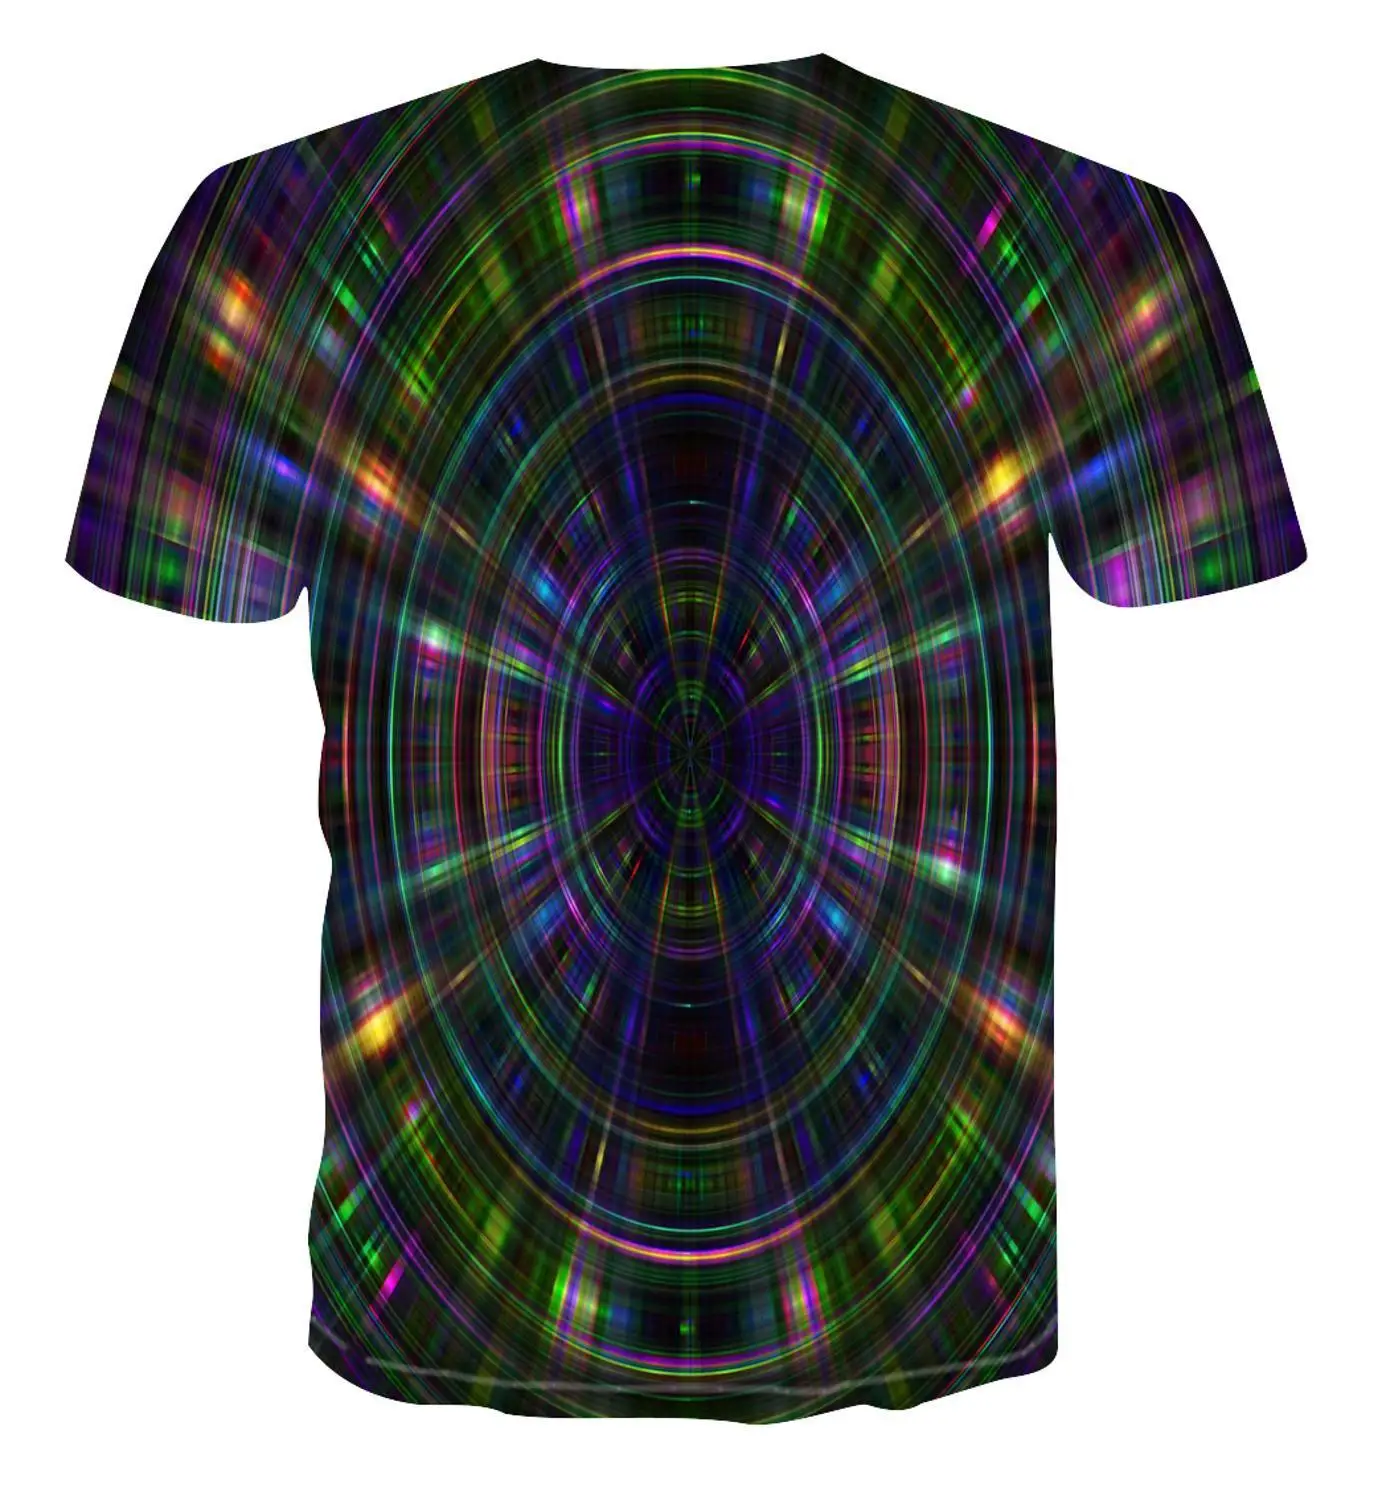 

2020 New Psychedelic T -Shirt Men 'S 3d T -Shirt Vertigo Printed T -Shirt Short Sleeve Casual Summer Top S -6xl